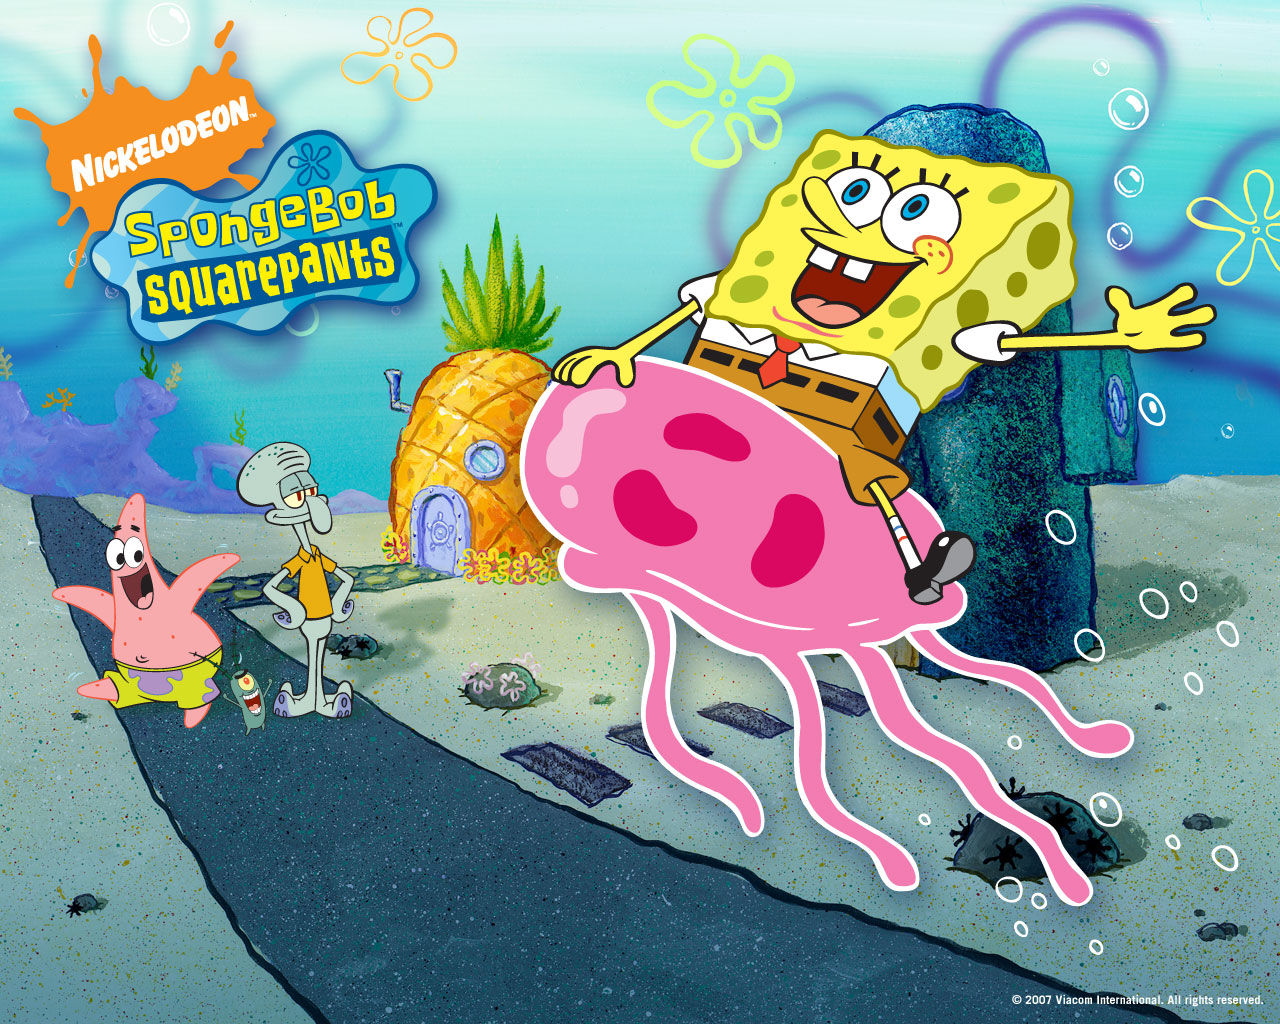 https://blogger.googleusercontent.com/img/b/R29vZ2xl/AVvXsEhJ3dl61nGJYt6MPQNjxWzF0TGT0ccAHV9p0D0pgCBGe4q8g18AhD4UuFevoTsJ5MJpF29ogO0wZT9POG9CwngECtNgo24tEncgx3tTCaTESaB8a0V9J5YhqGyGO2d8XXPsvjoS_lHTvWg/s1600/Spongebob-P-P-spongebob-squarepants-24522939-1280-1024.jpg